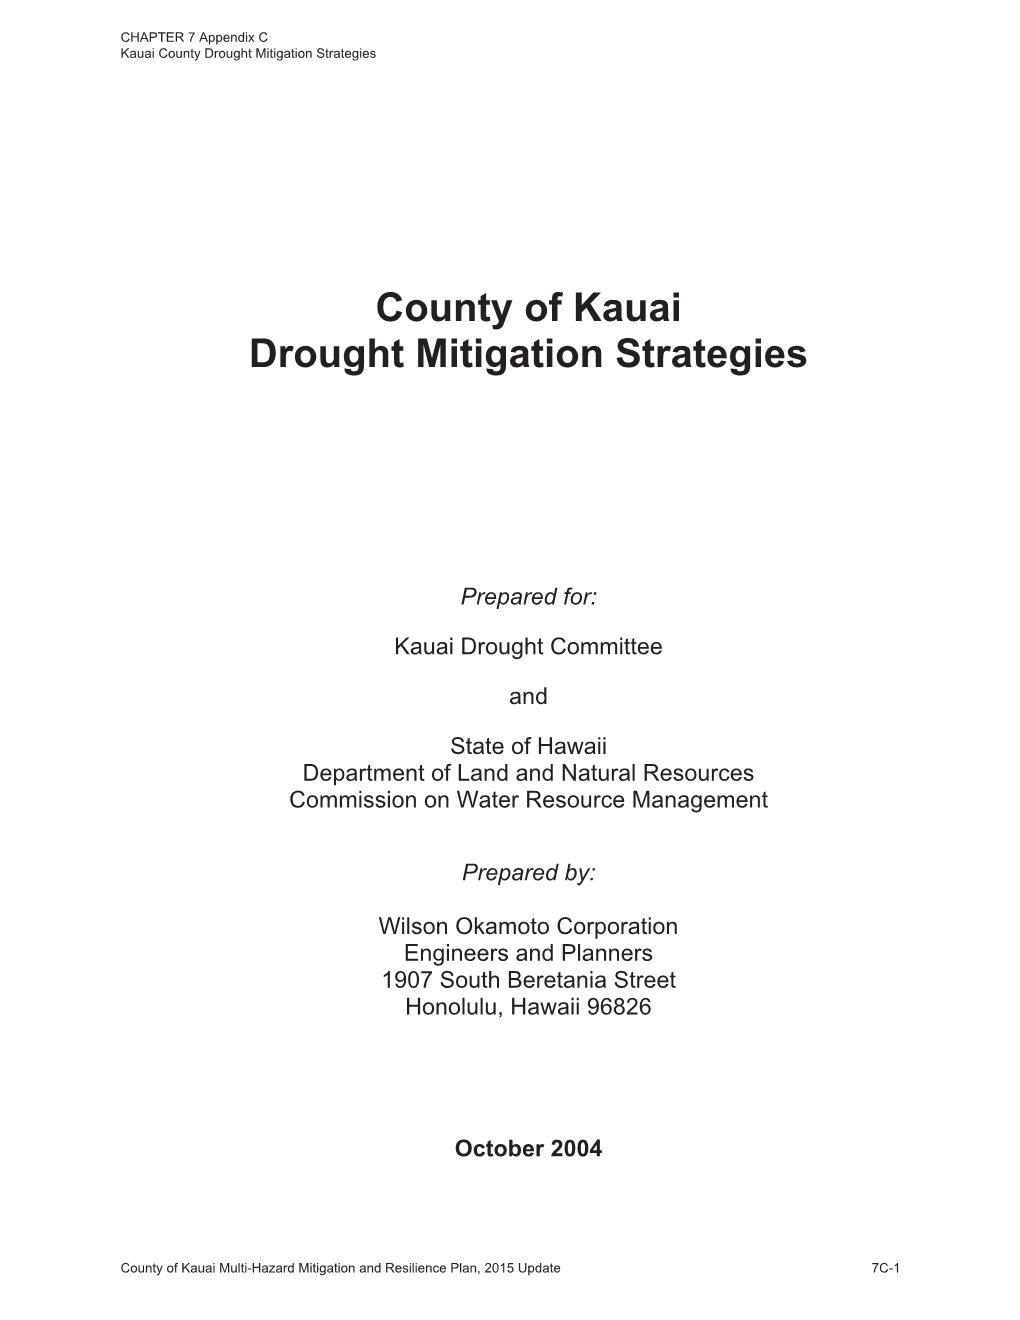 County of Kauai Drought Mitigation Strategies